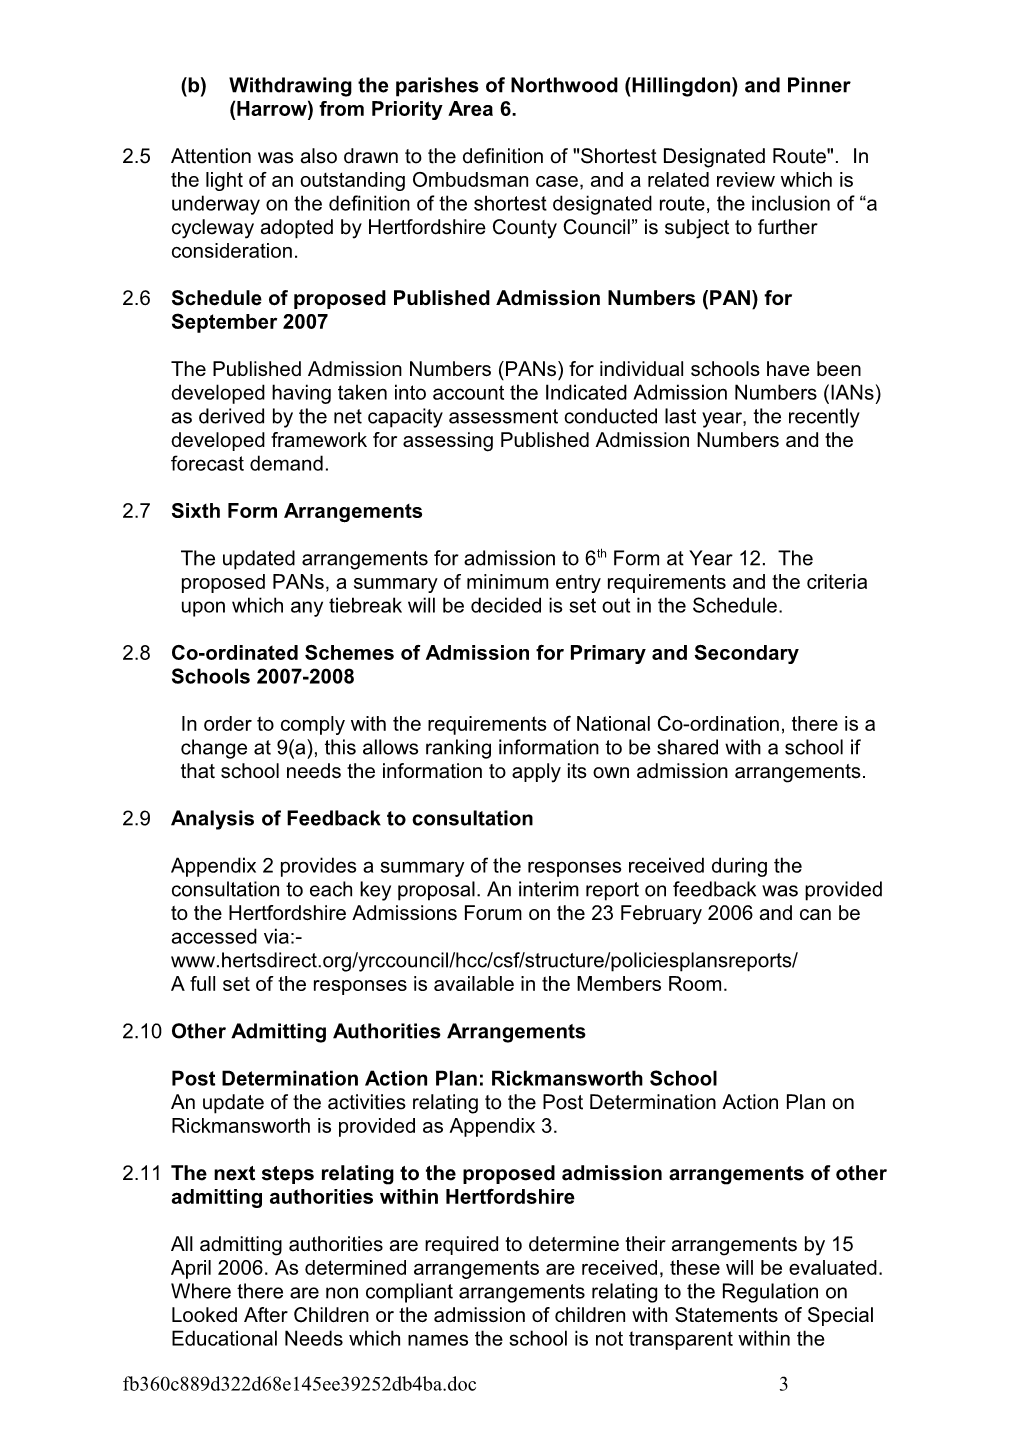 Consultation on Admission Arrangements for 2007-2008